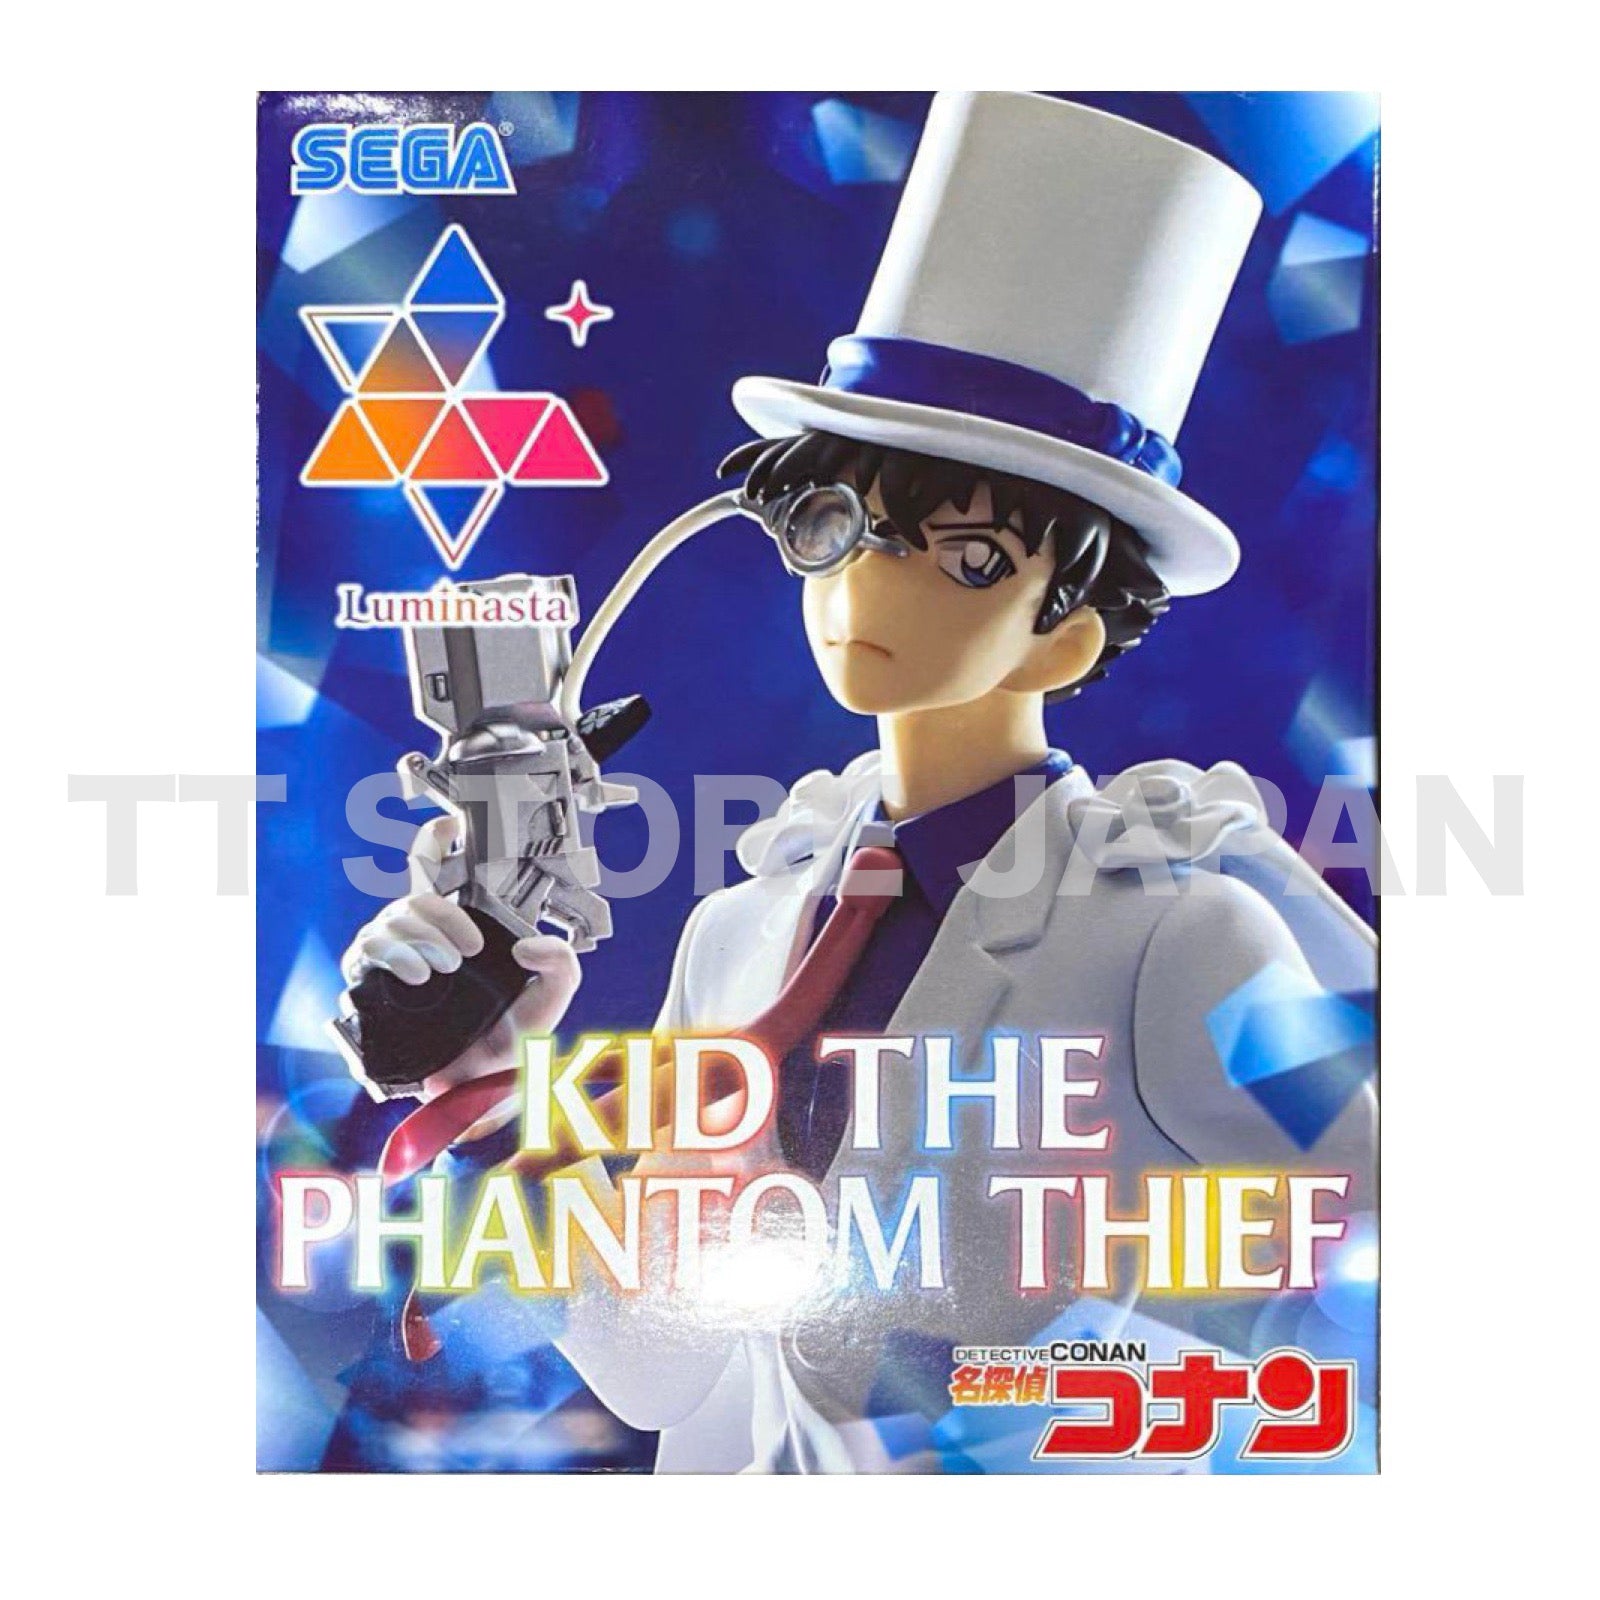 Detective Conan Kid the phantom thief Figure Luminasta SEGA – TT 